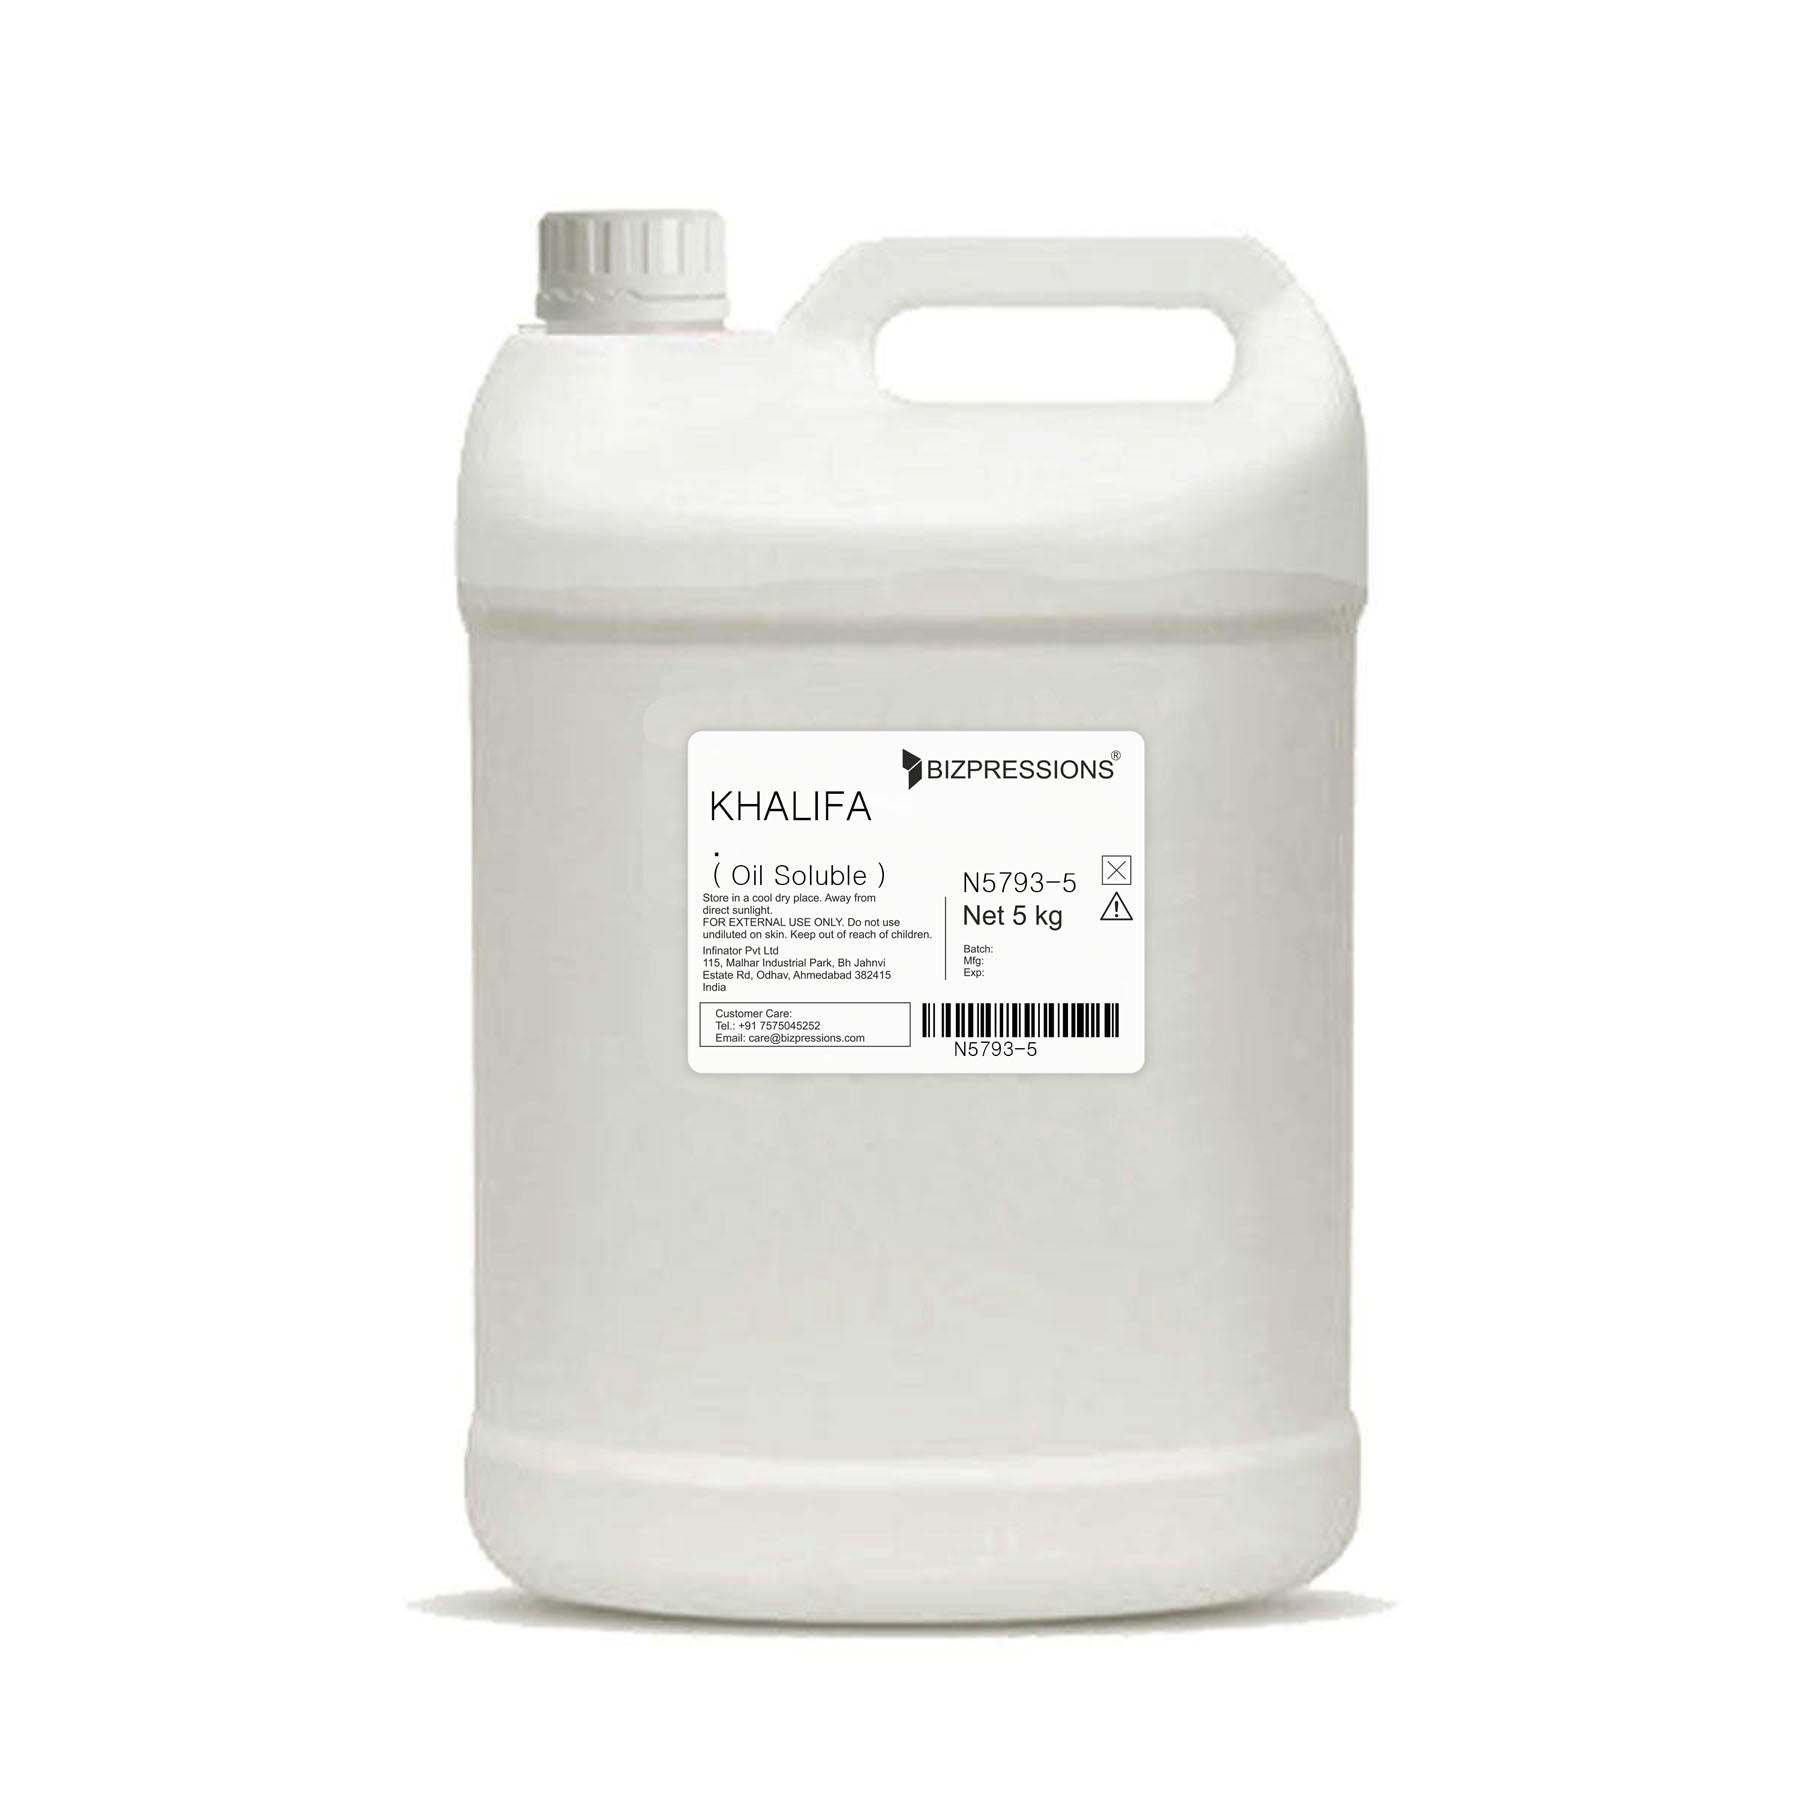 KHALIFA - Fragrance ( Oil Soluble ) - 5 kg